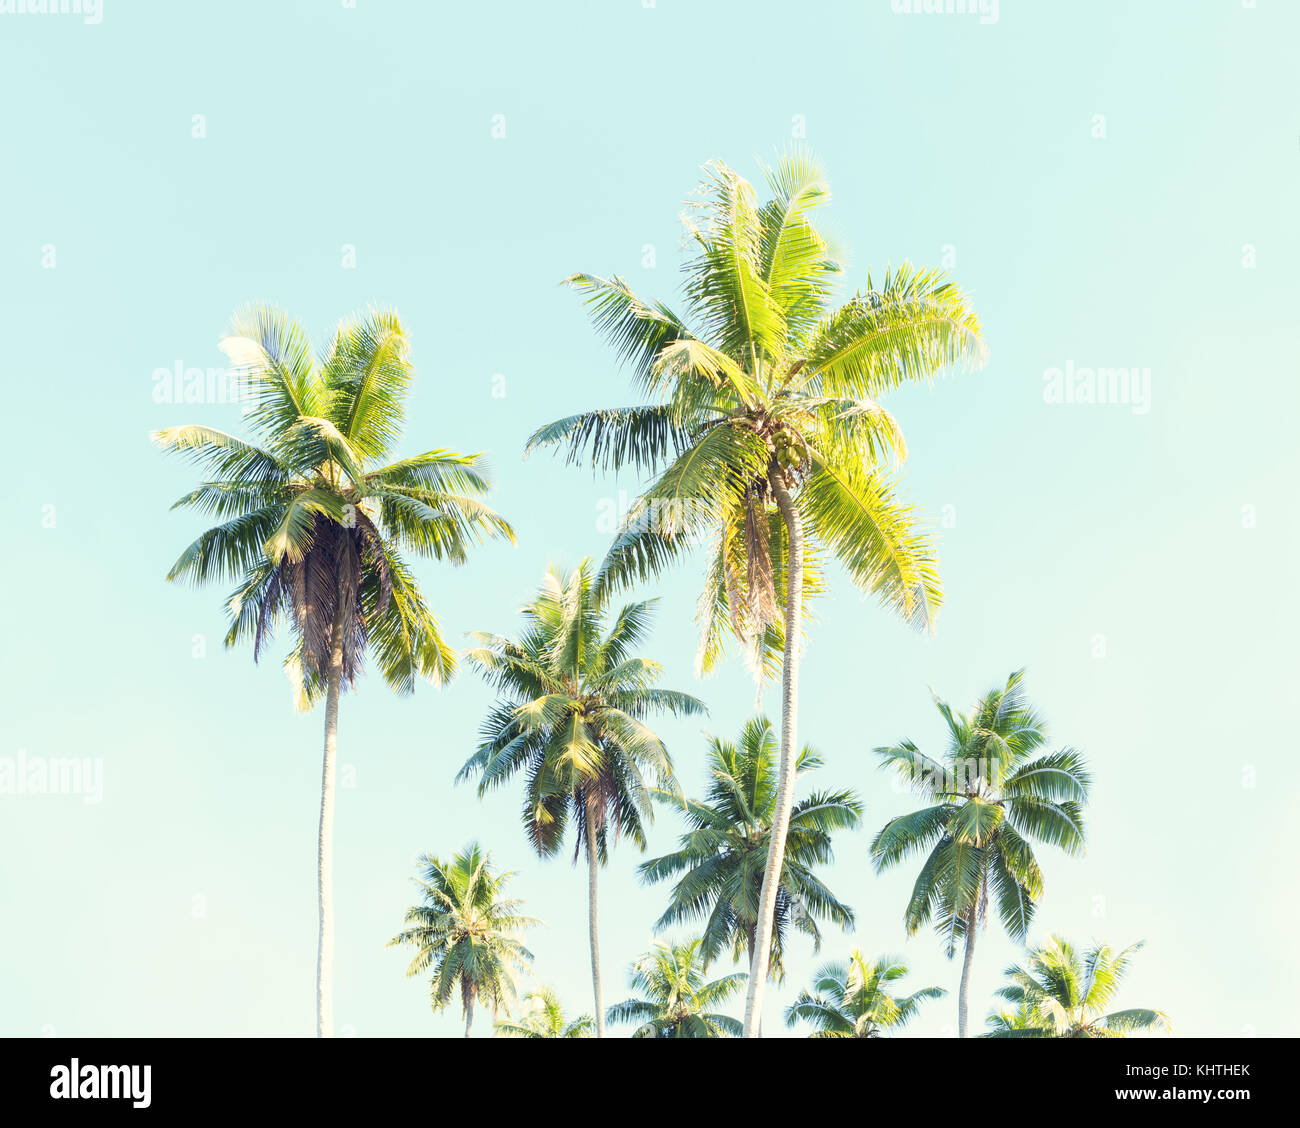 Kokospalmen gegen den blauen Himmel. Getonten Bild Stockfoto